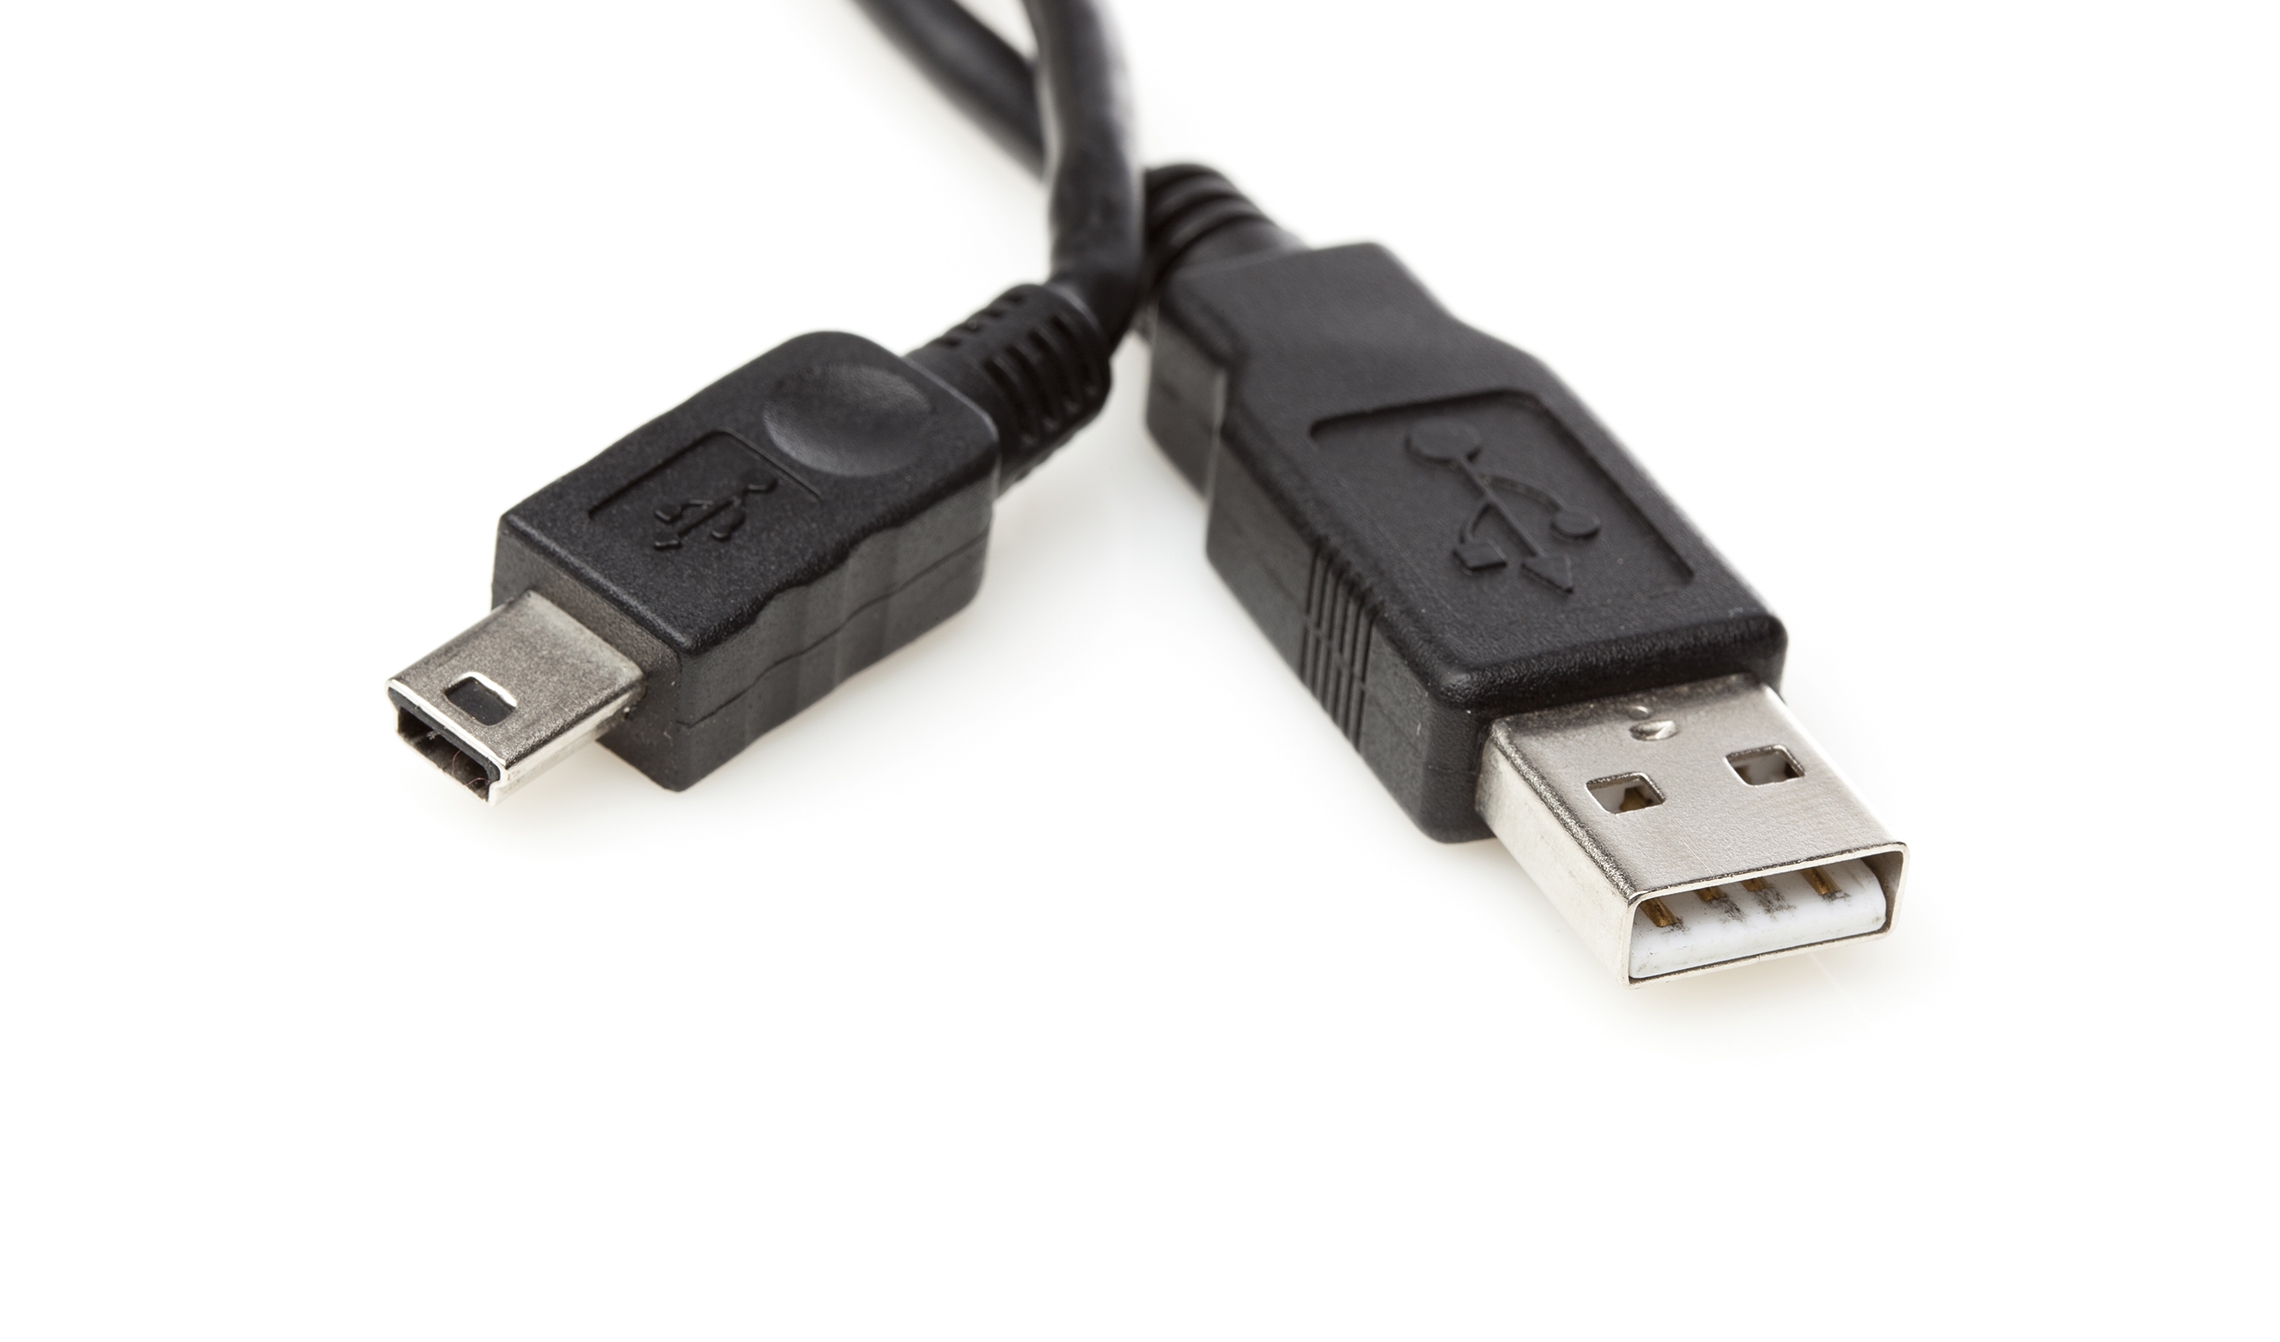 USB Update Cable | Safescan.com